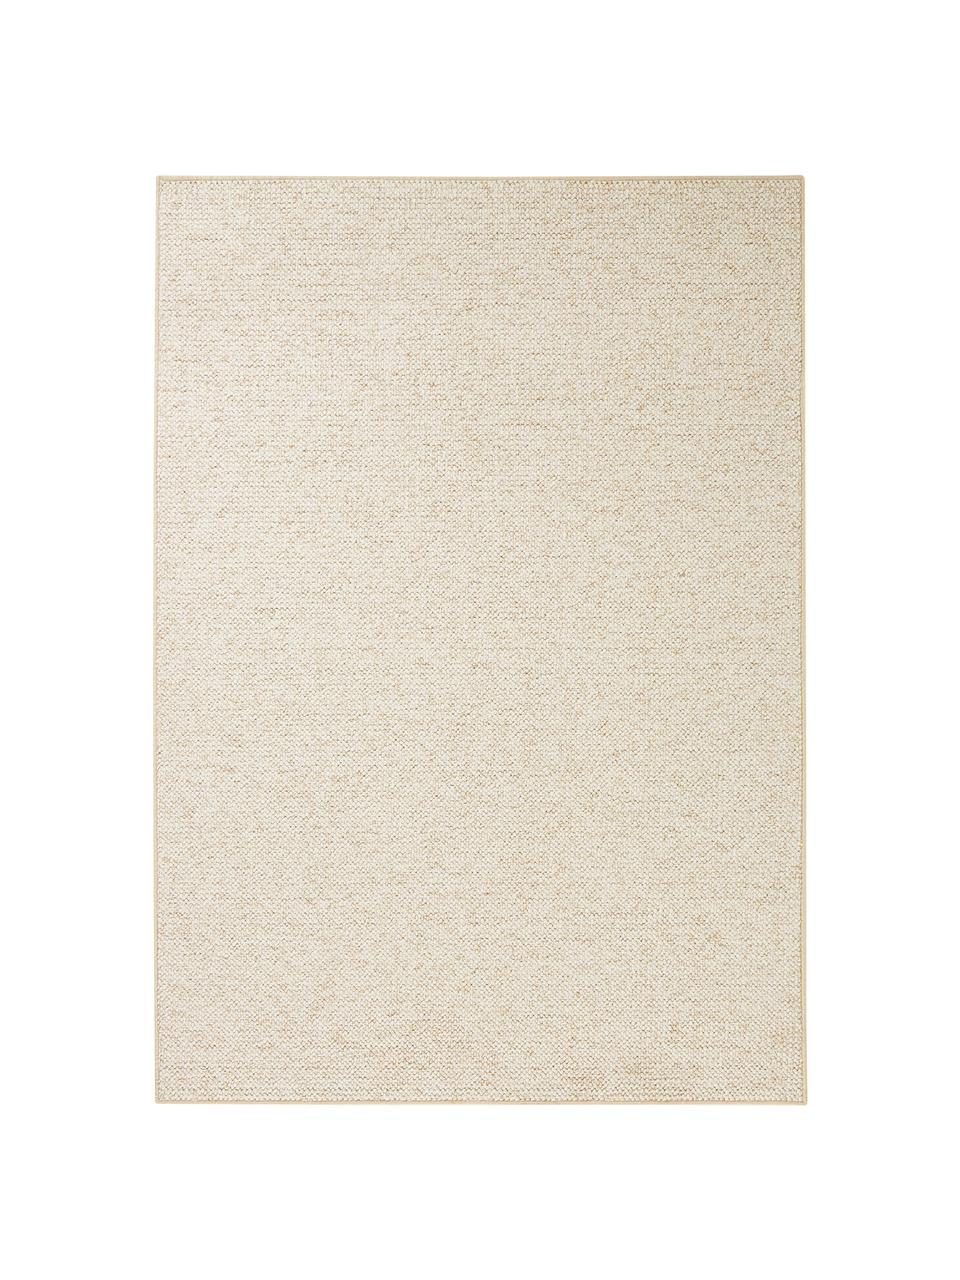 Niederflor-Teppich Lyon mit Schlingen-Flor, Flor: 100% Polypropylen, Beige, B 140 x L 200 cm (Größe S)